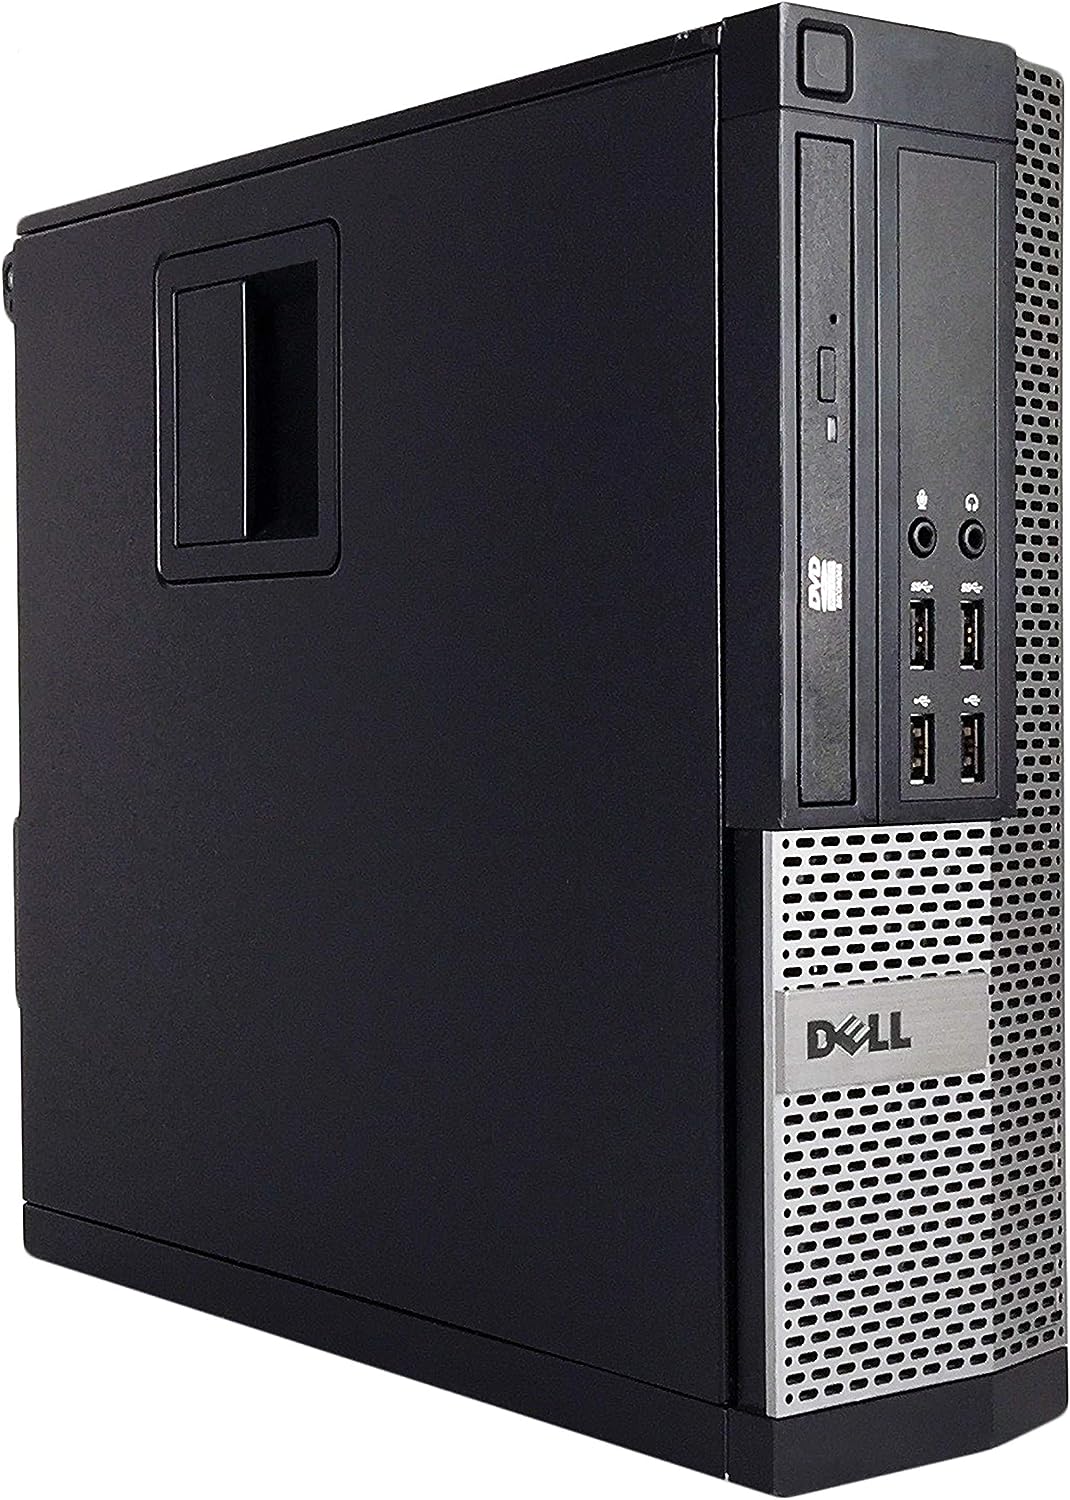 Dell Optiplex 7010 SFF Desktop PC - Intel Core i5-3470 3.2GHz 4GB 250GB DVD Windows 10 Pro (Renewed) : Electronics